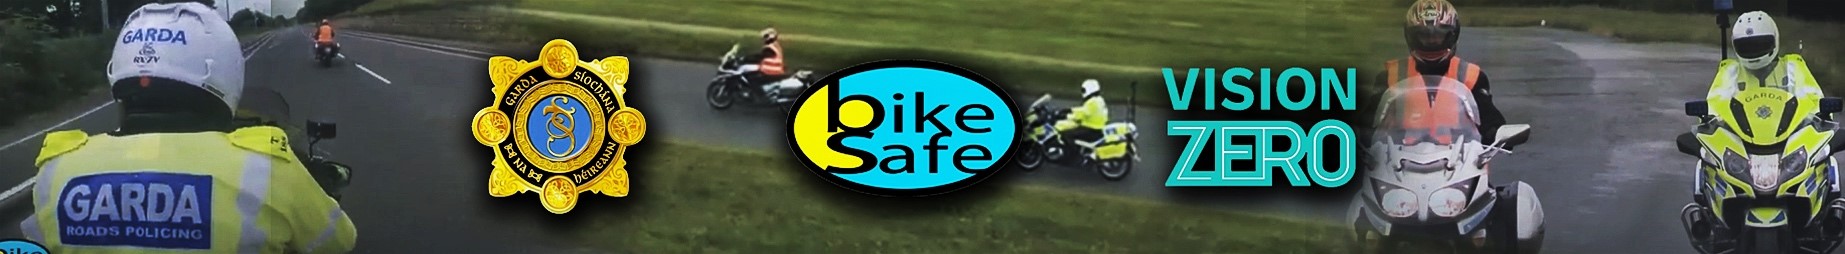 Bikesafe_Mirel_Basic__Garda_Website